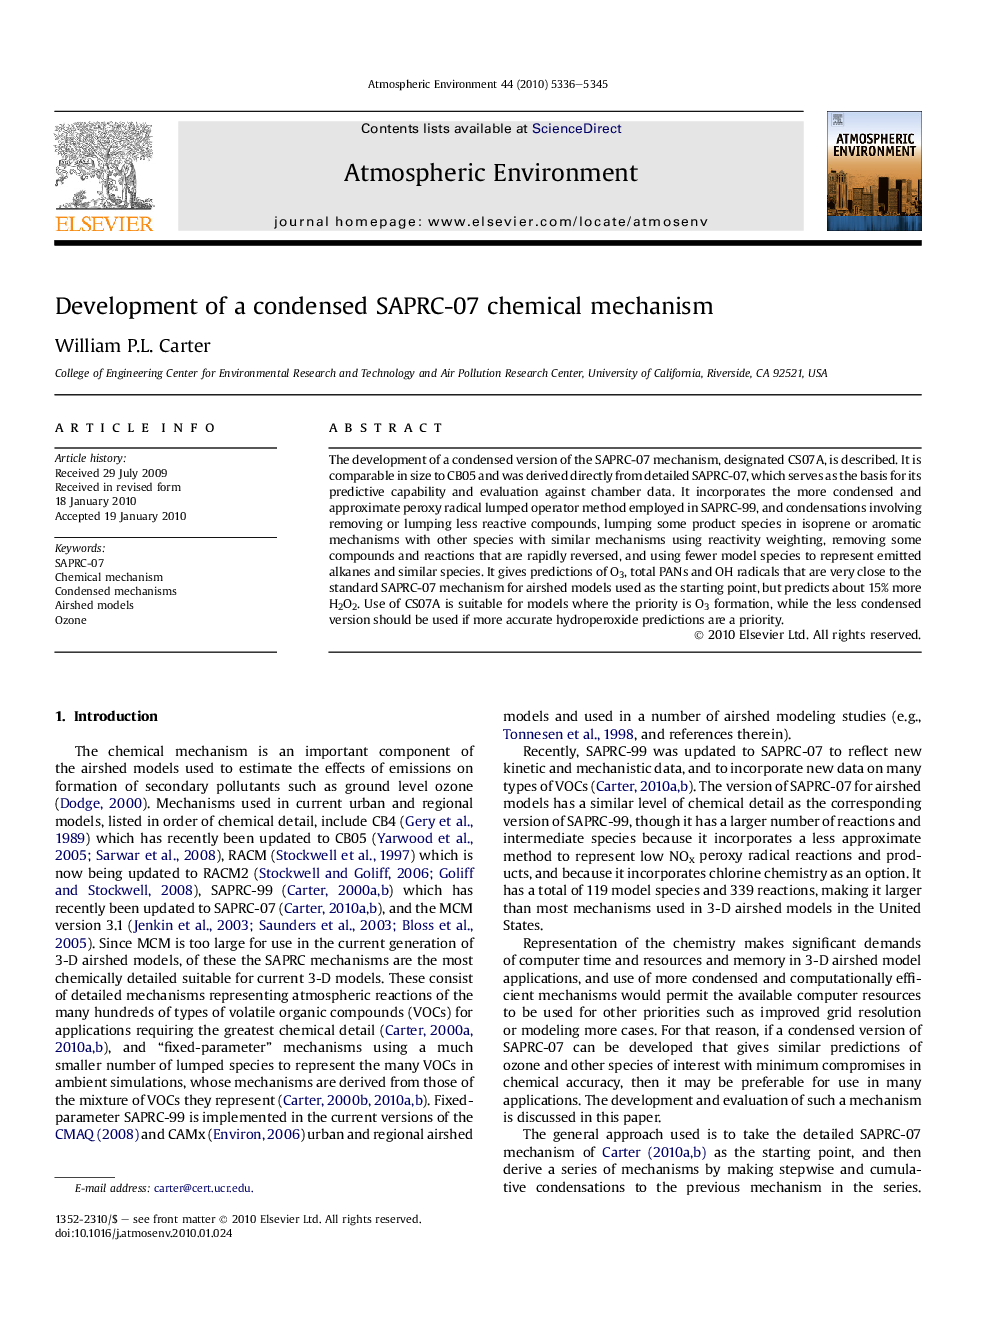 Development of a condensed SAPRC-07 chemical mechanism